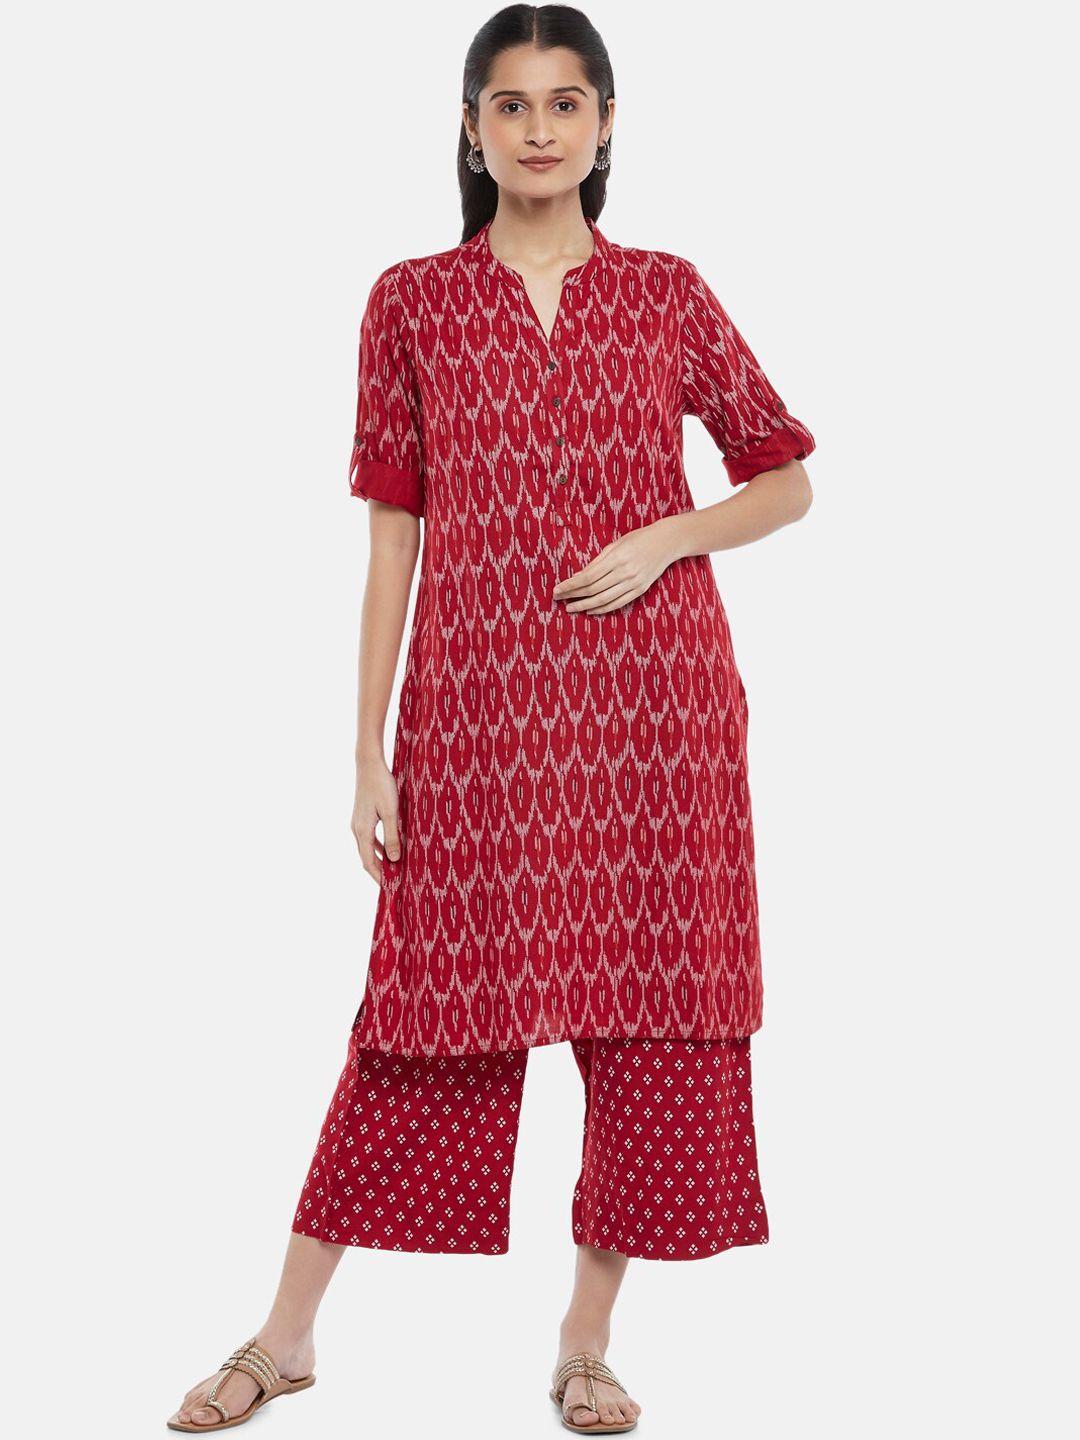 rangmanch by pantaloons women red printed kurta with palazzos